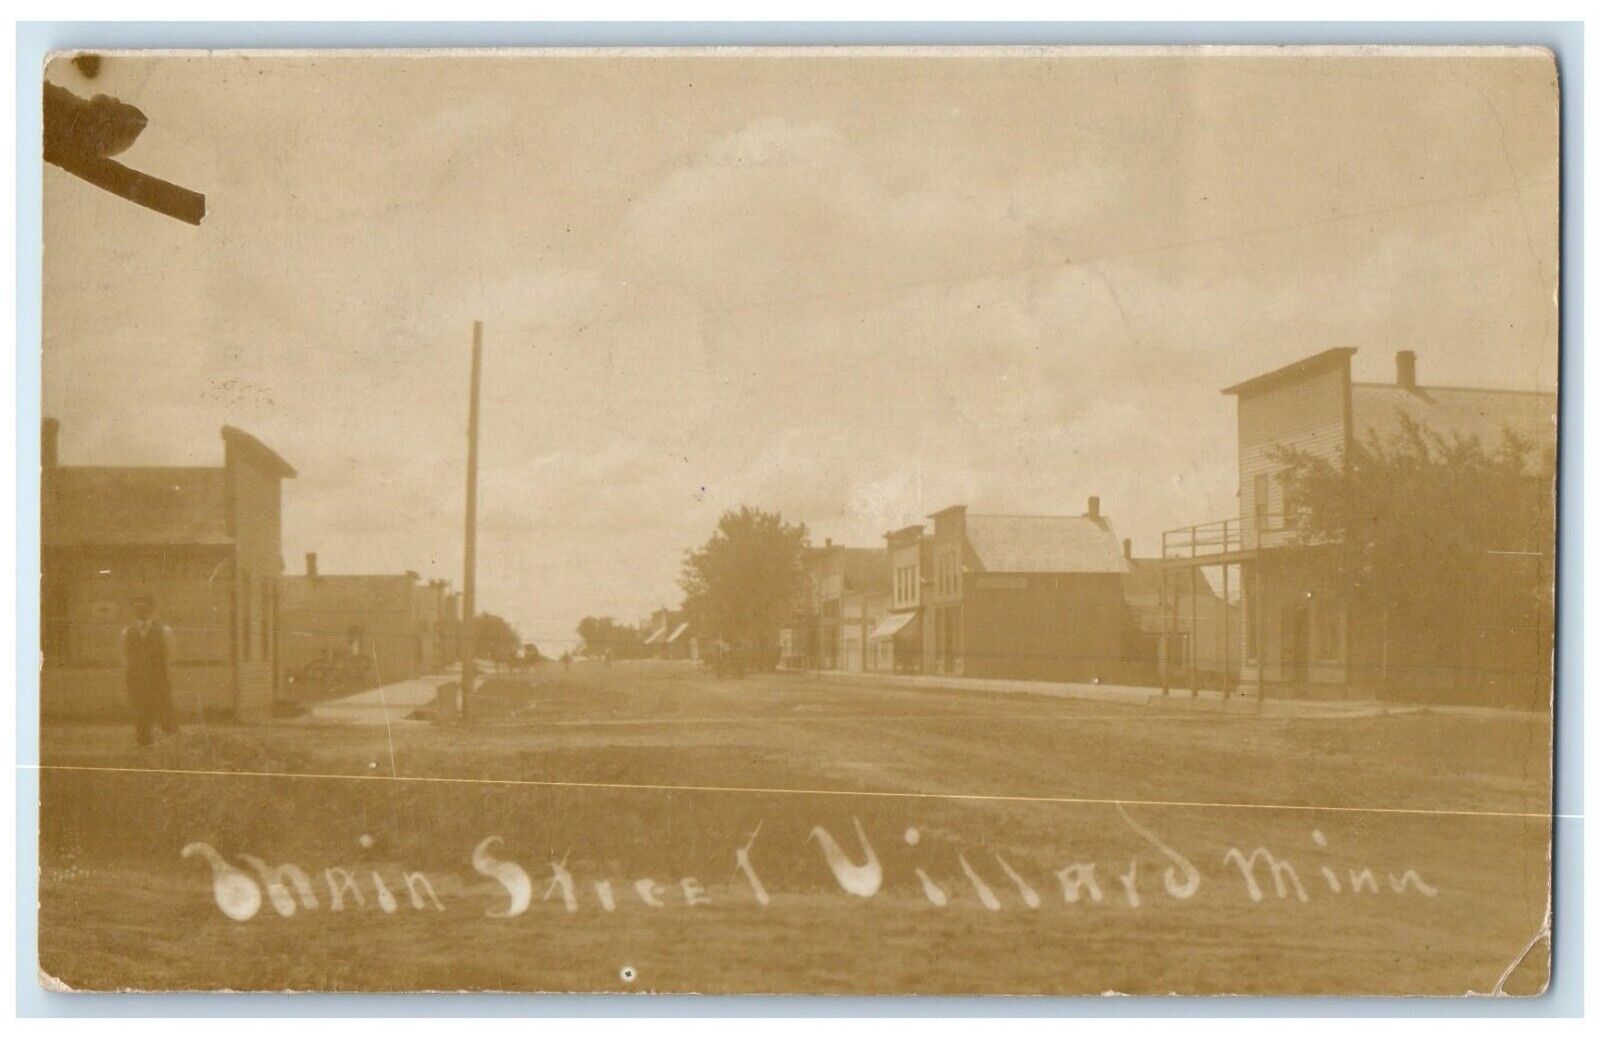 Villard Minnesota MN RPPC Photo Postcard Main Street View c1910's Posted Antique